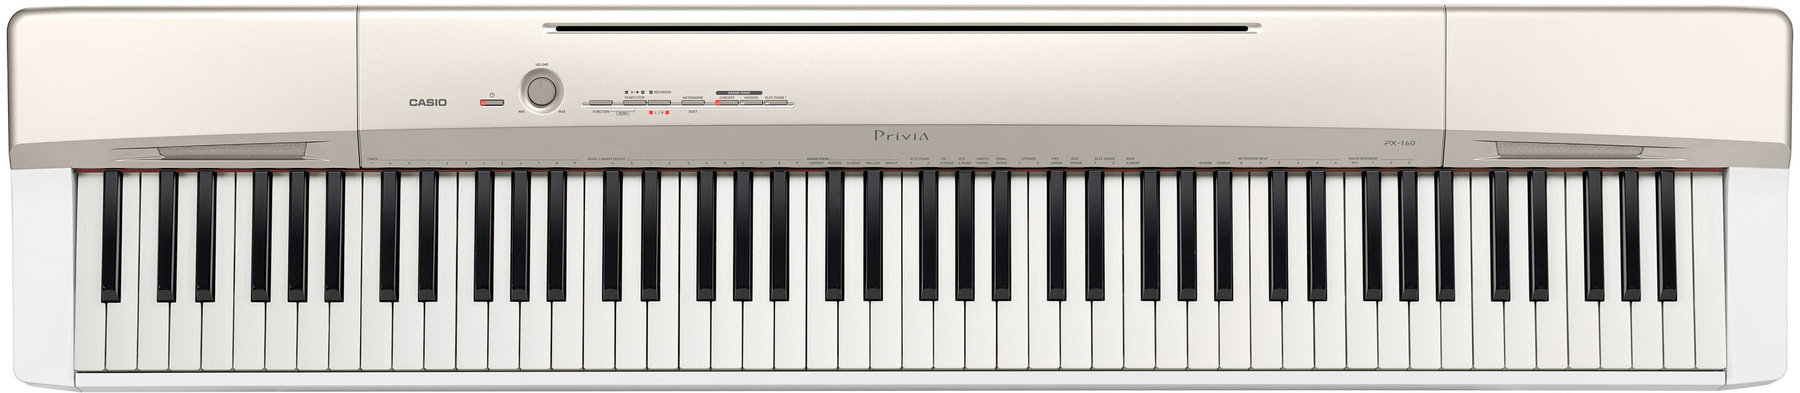 Színpadi zongora Casio PX-160GD Színpadi zongora